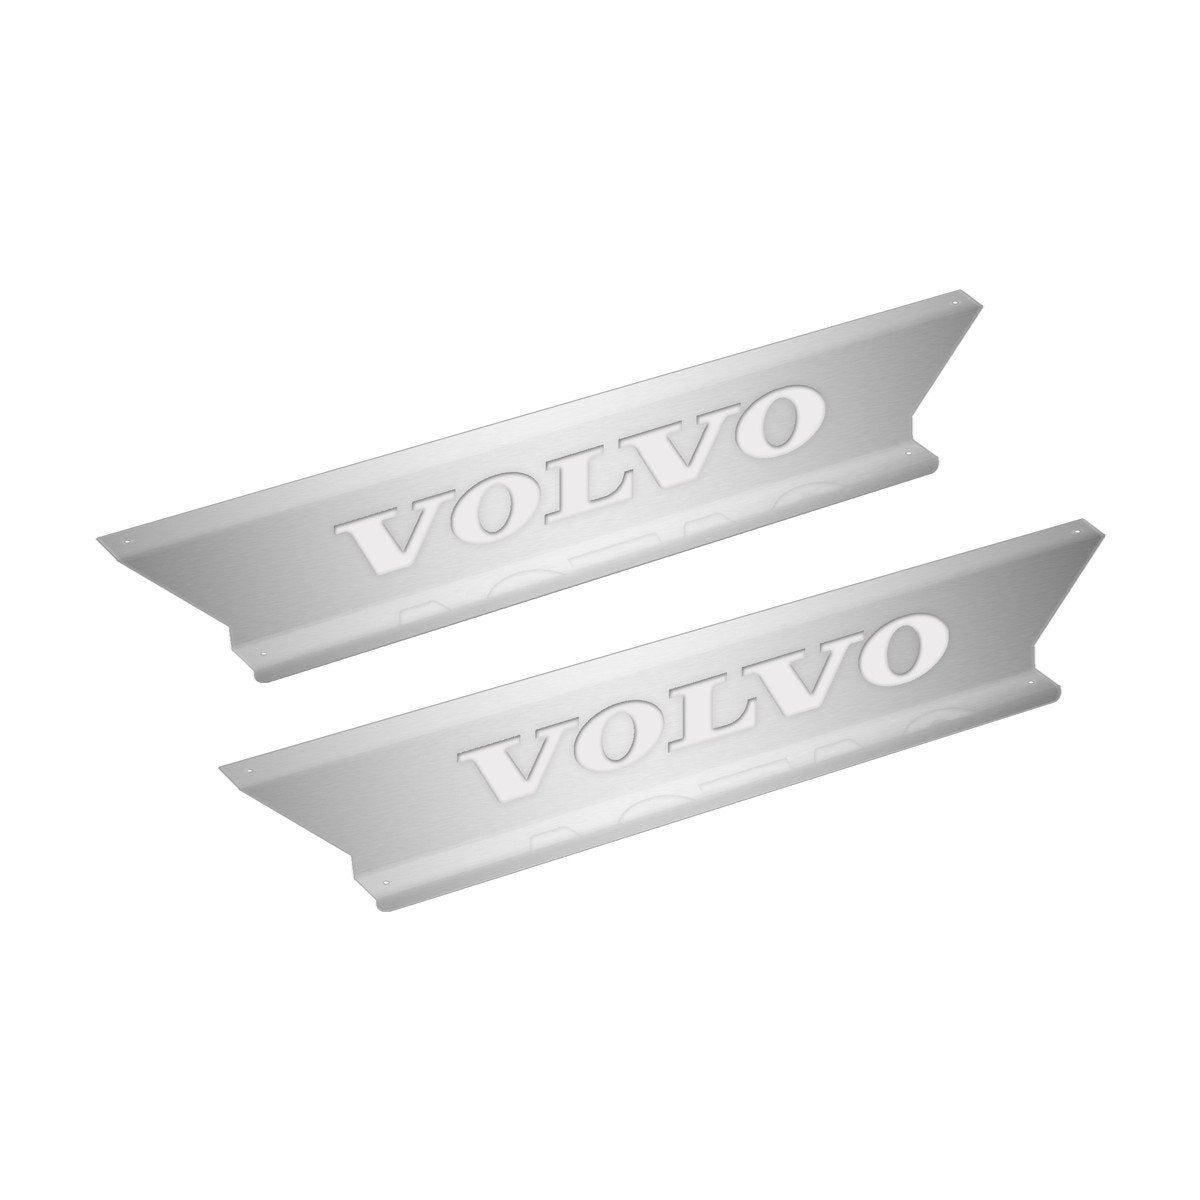 Volvo Front Kick Panel Trim - Volvo Logo Pair Cab Exterior